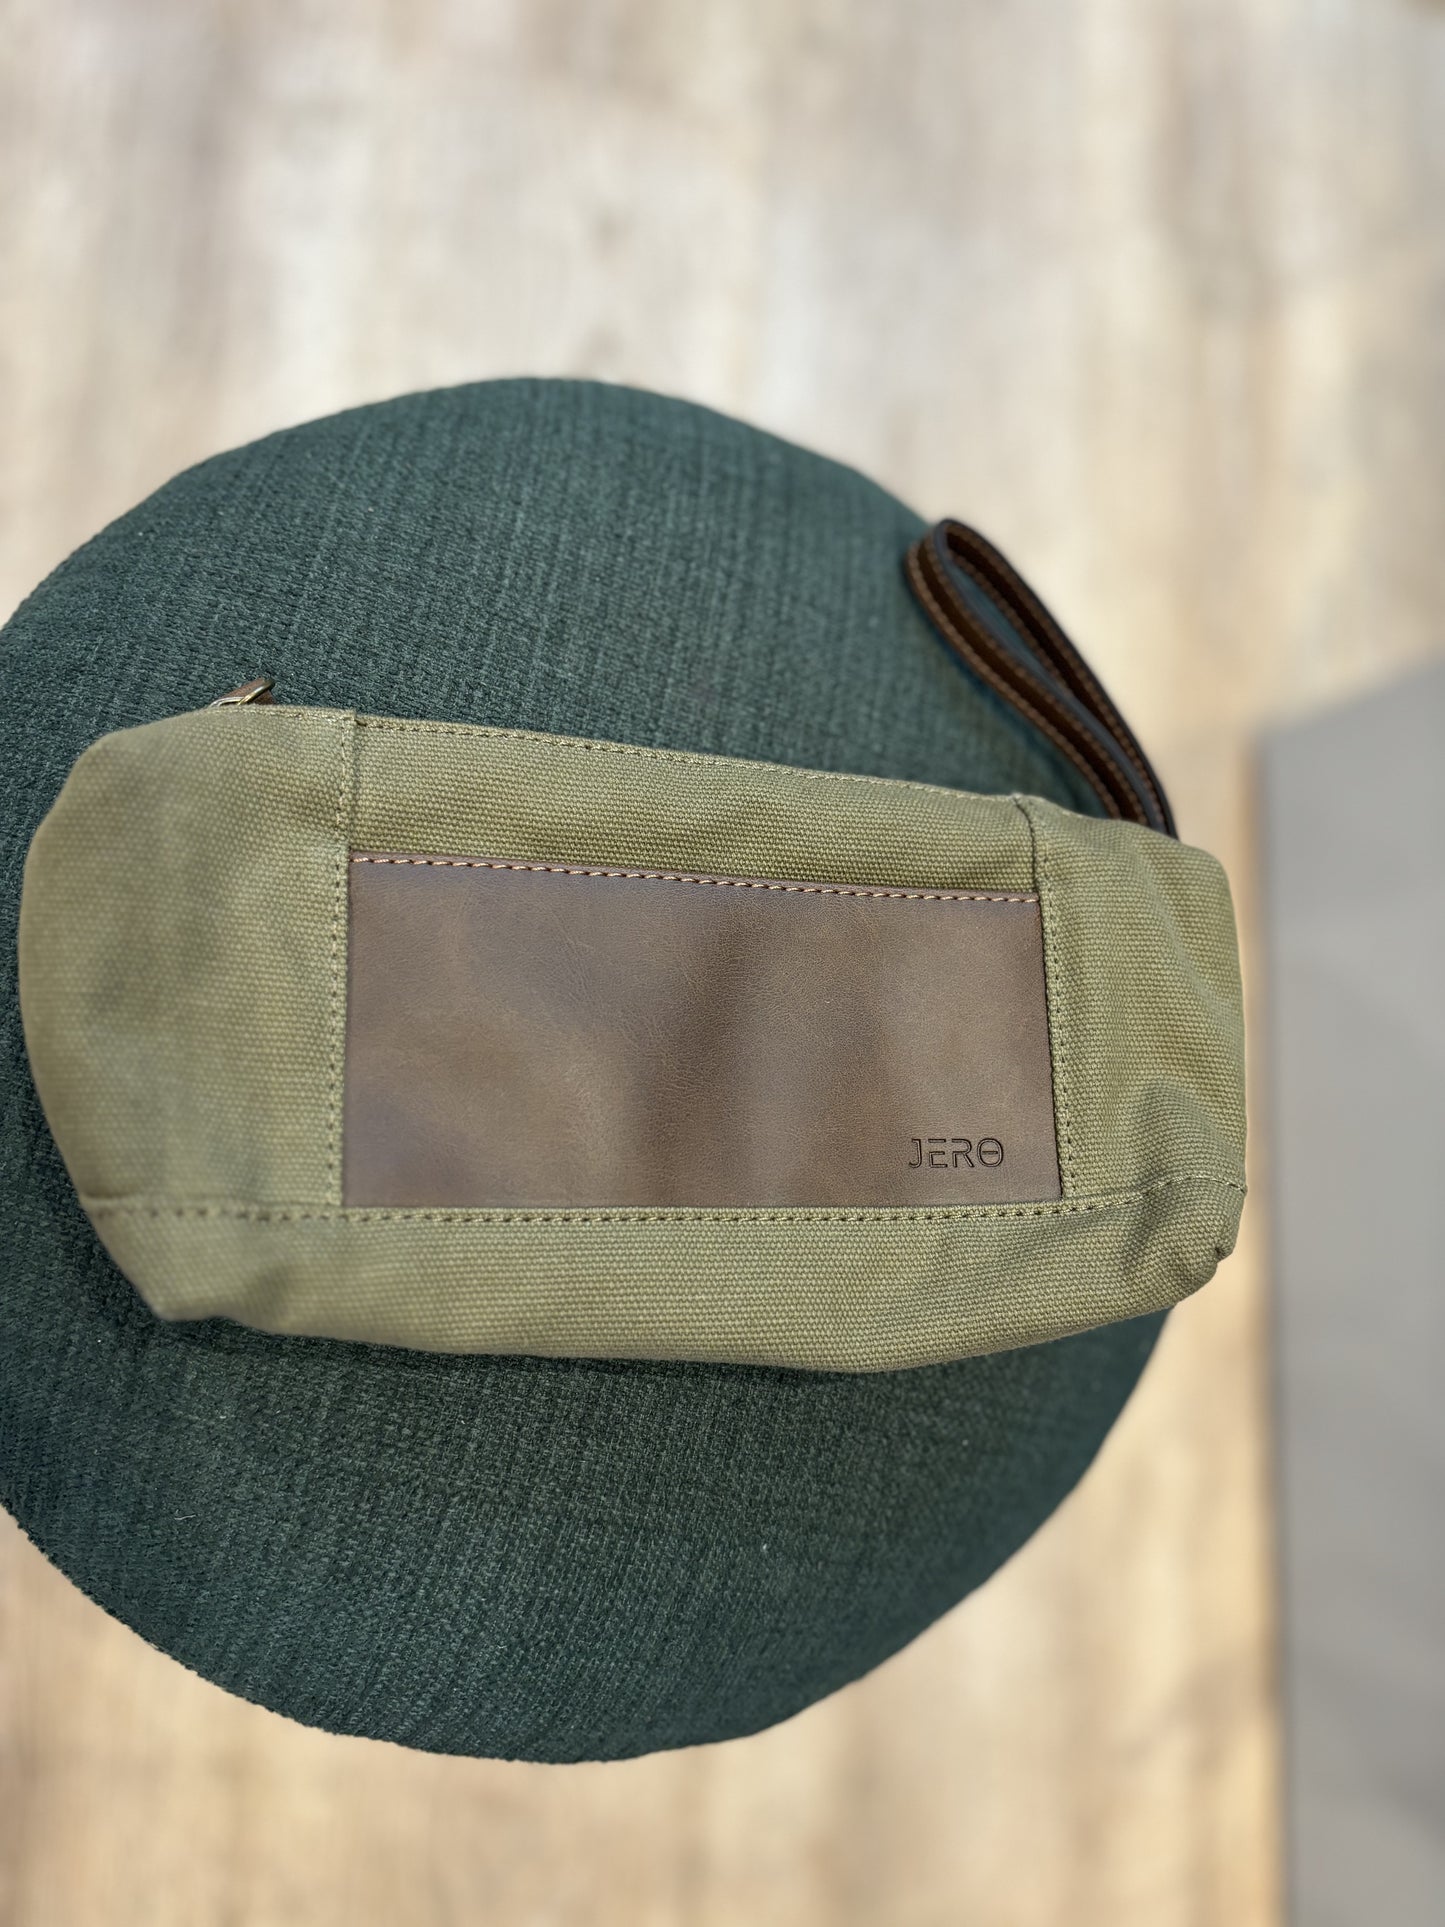 Portable Travel Kit Bag